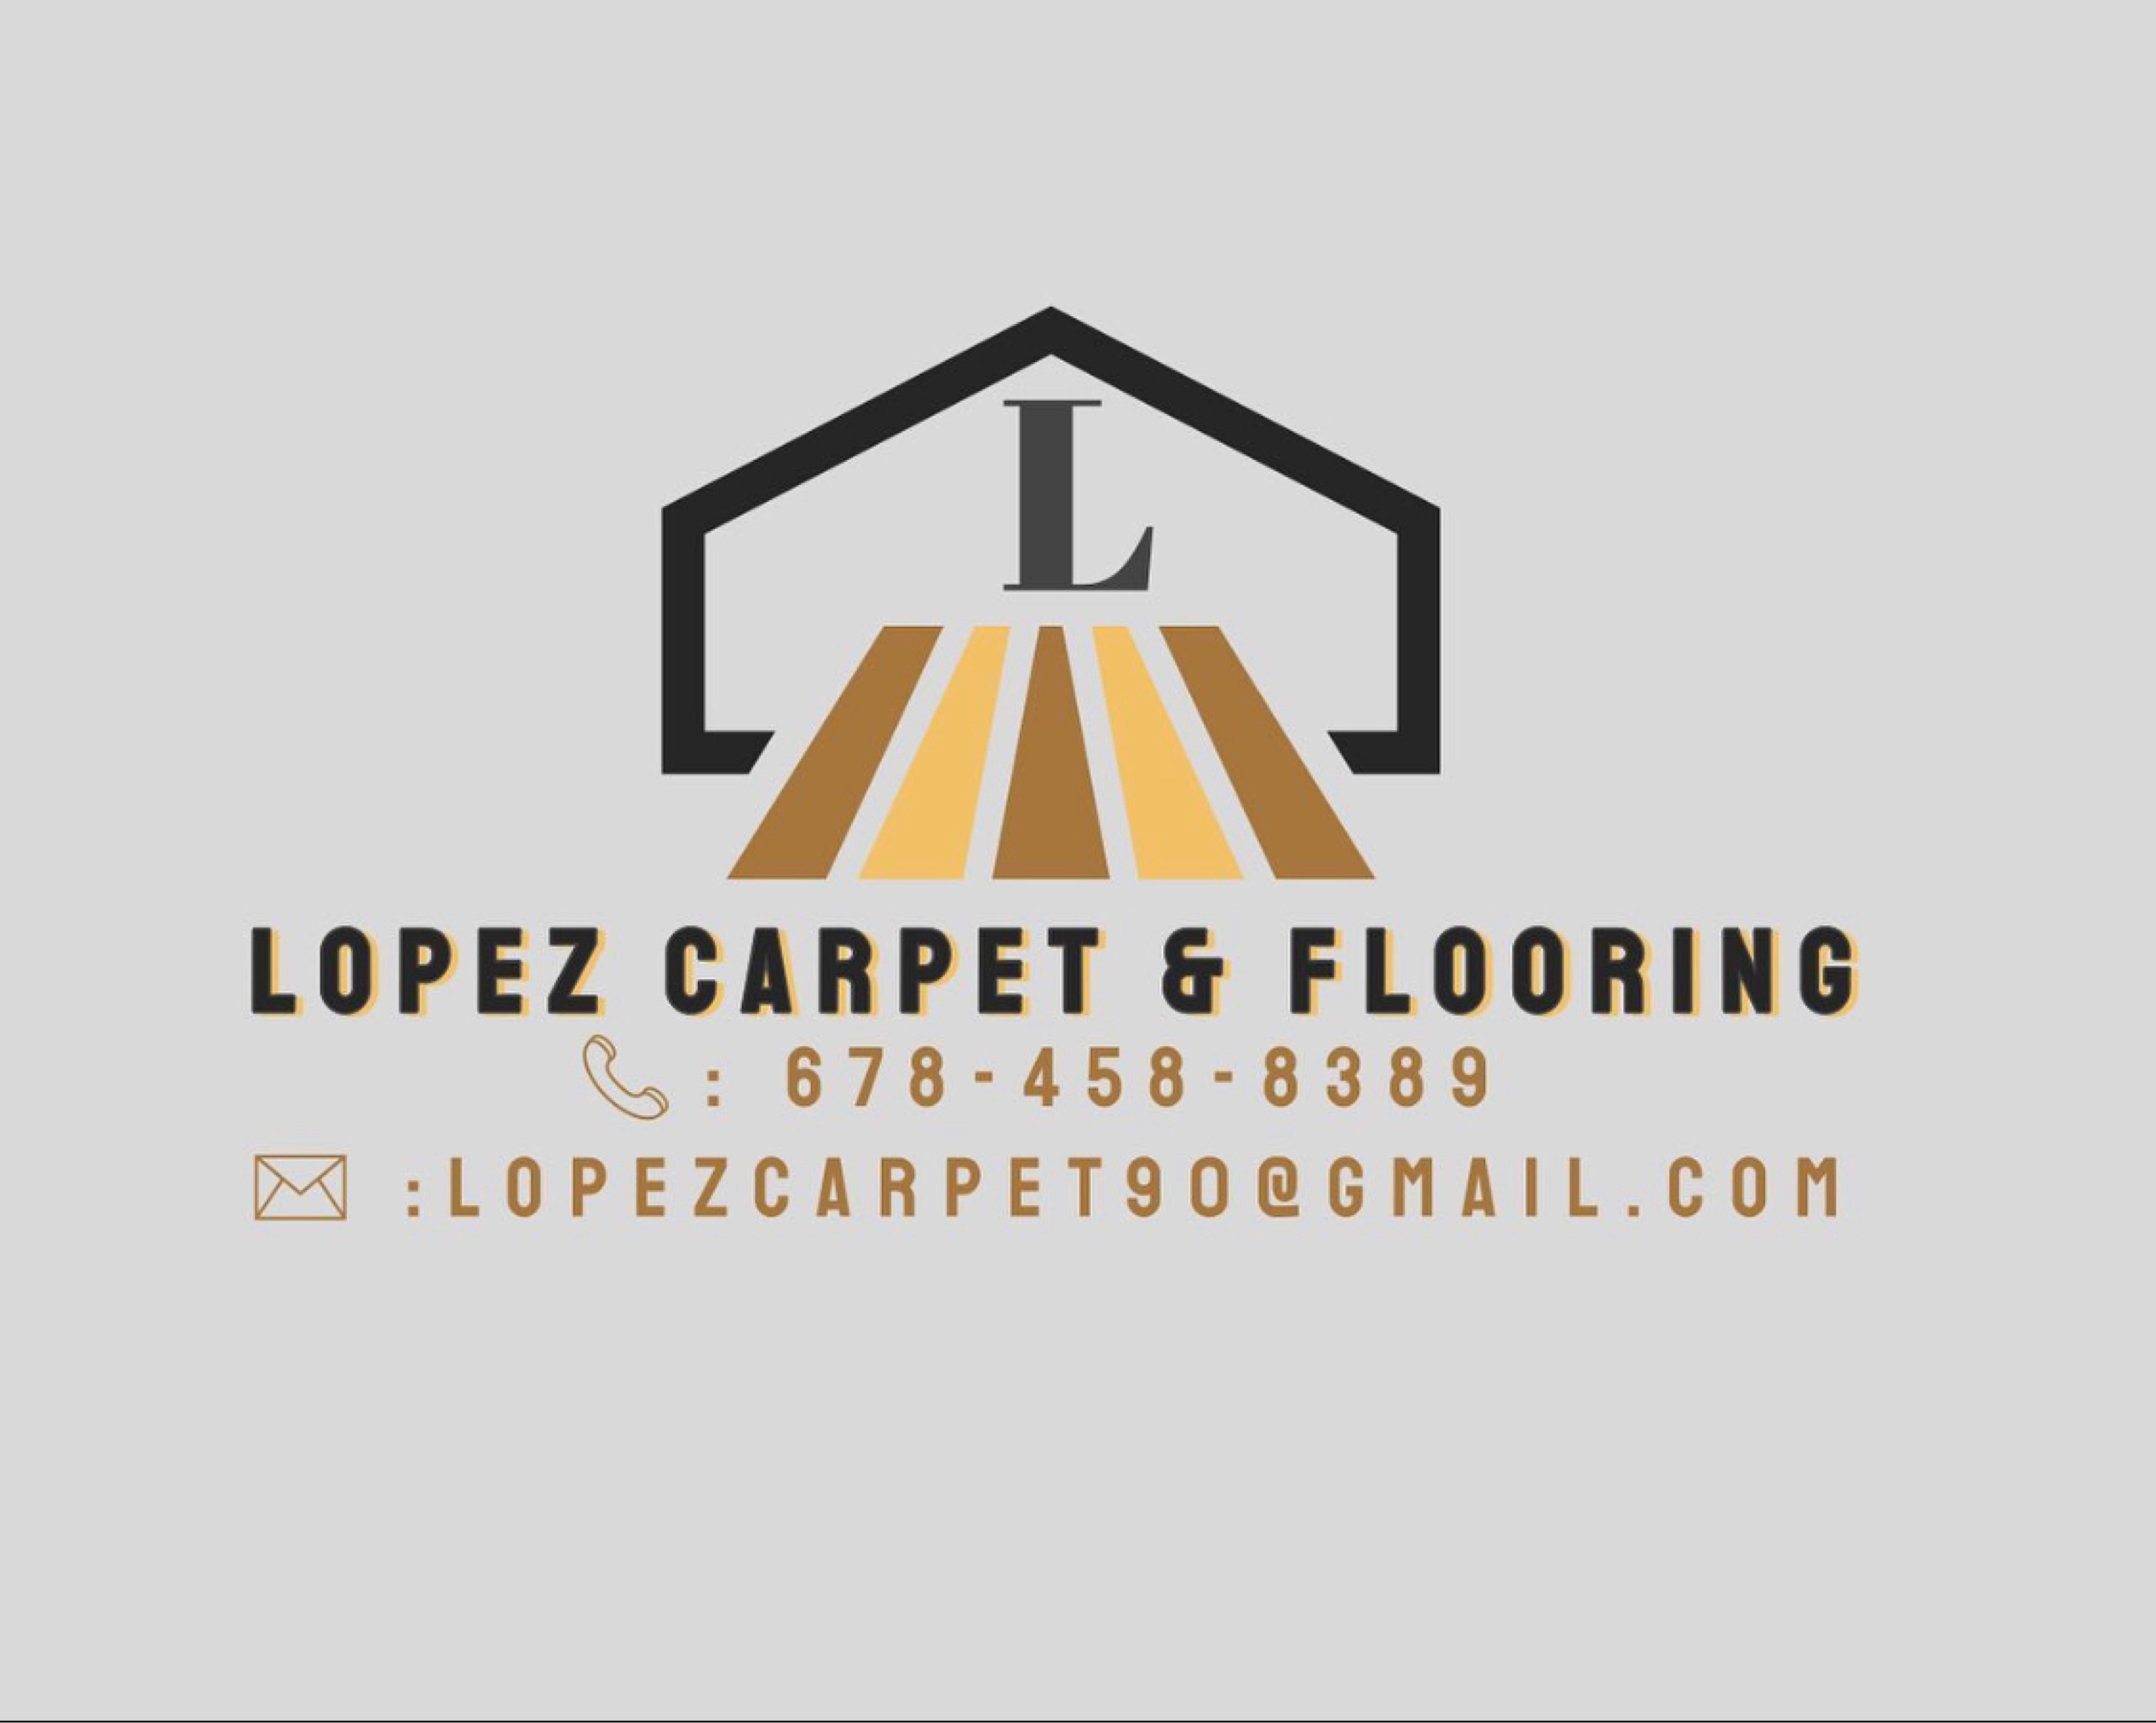 Lopez Carpet & Flooring Logo